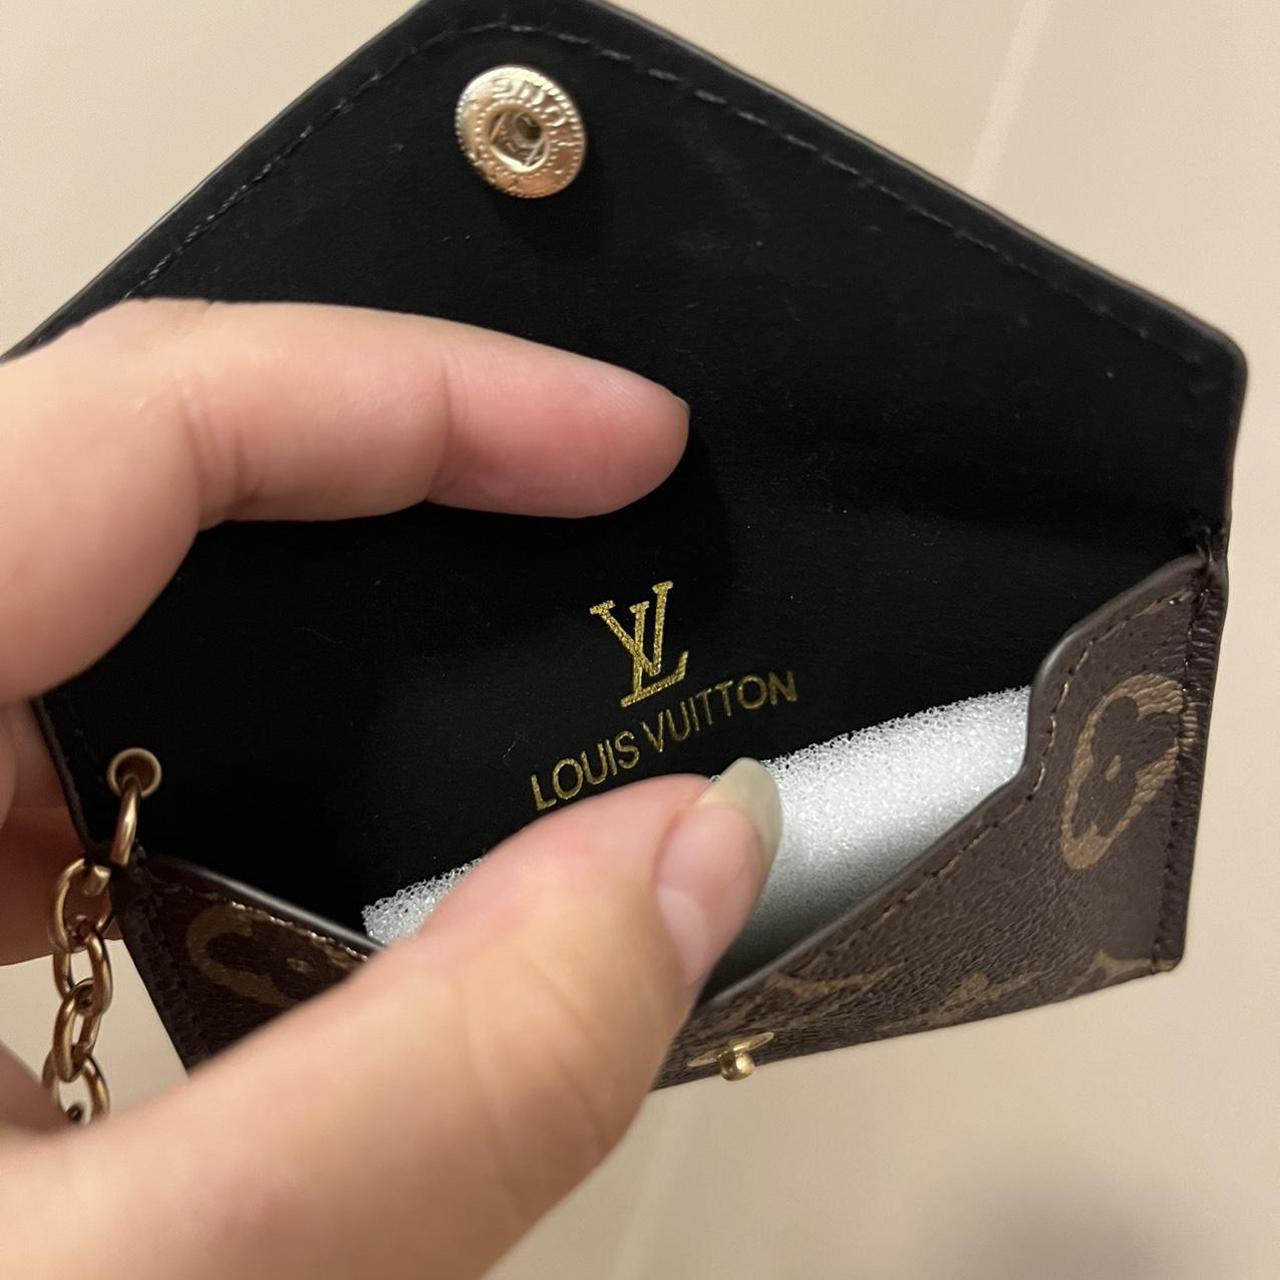 Real leader Louis Vuitton wallet - Depop